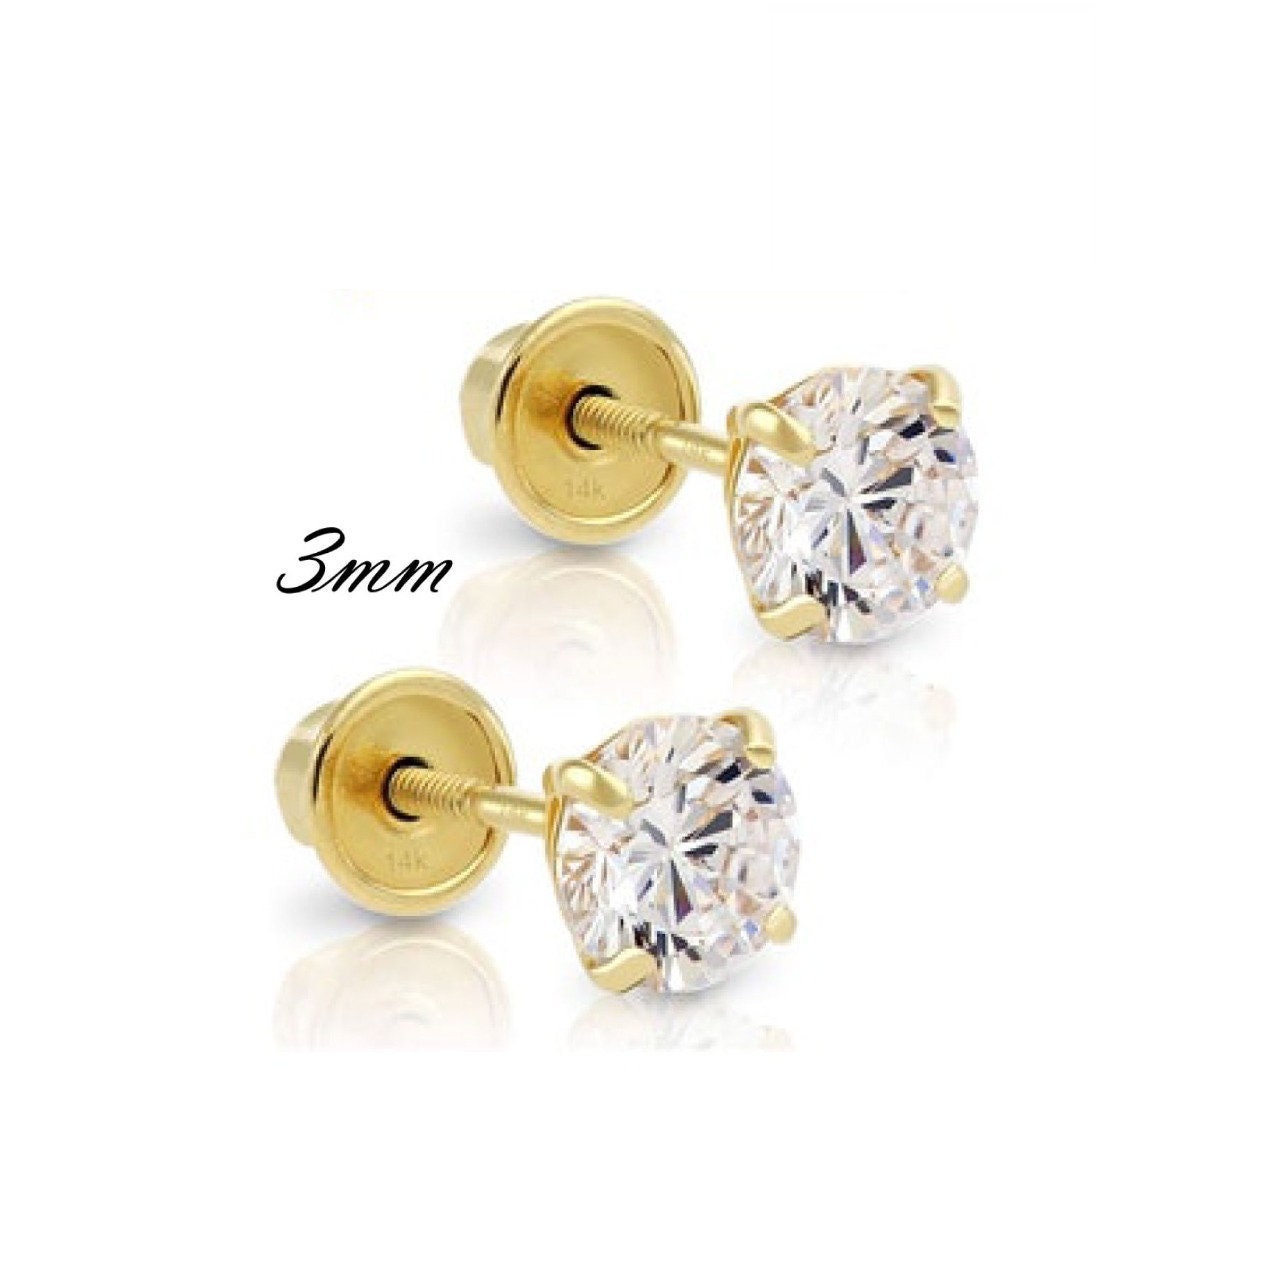 Share 150+ newborn baby earrings gold latest